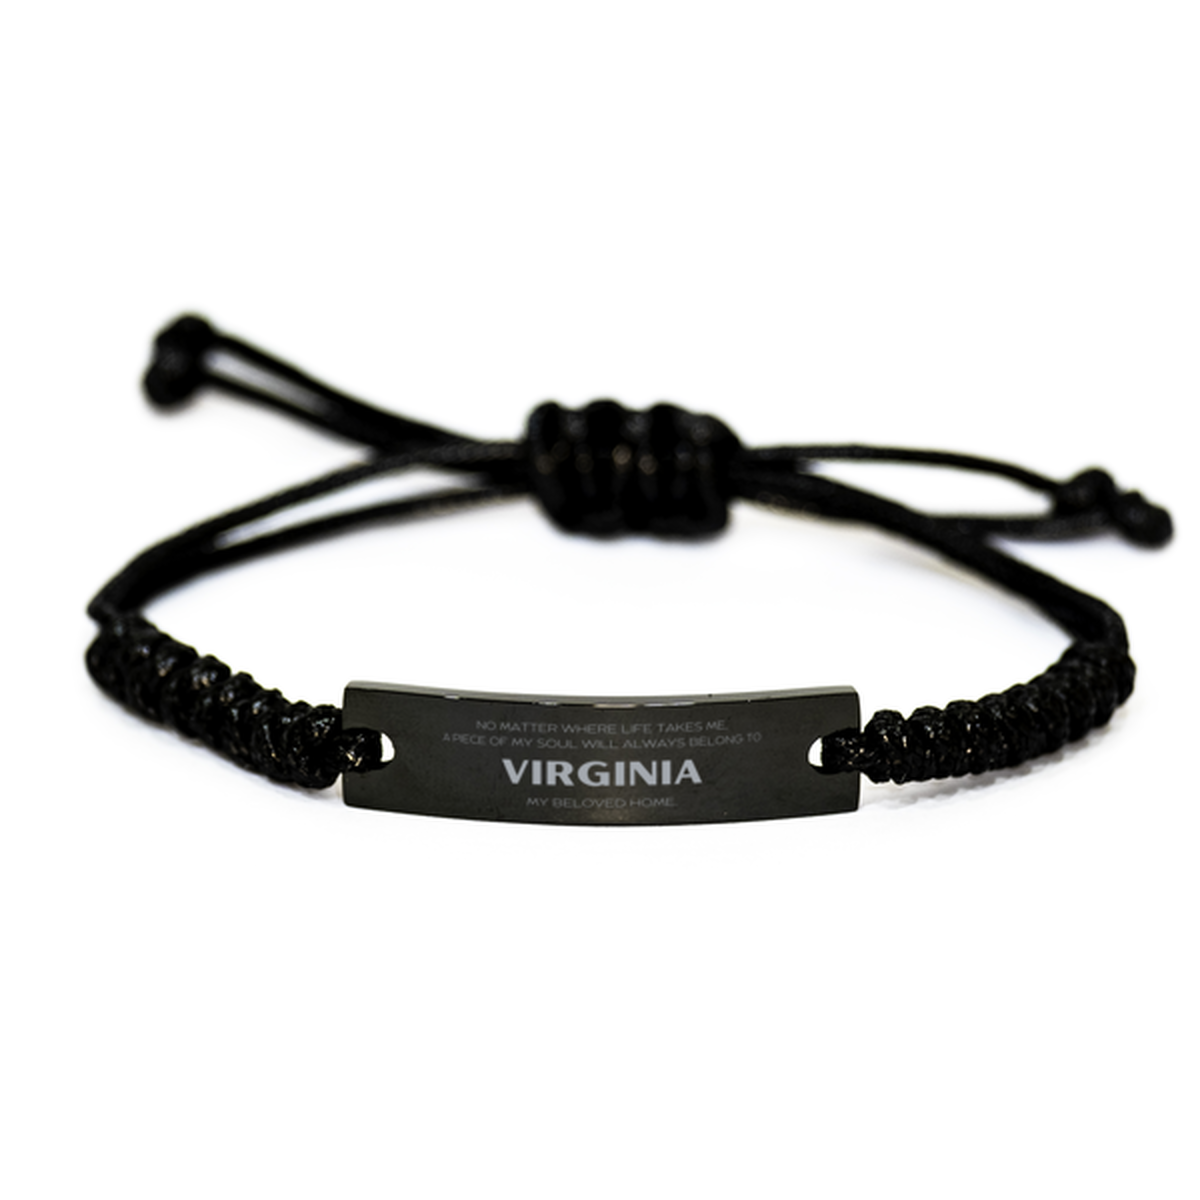 Love Virginia State Gifts, My soul will always belong to Virginia, Proud Black Rope Bracelet, Birthday Unique Gifts For Virginia Men, Women, Friends